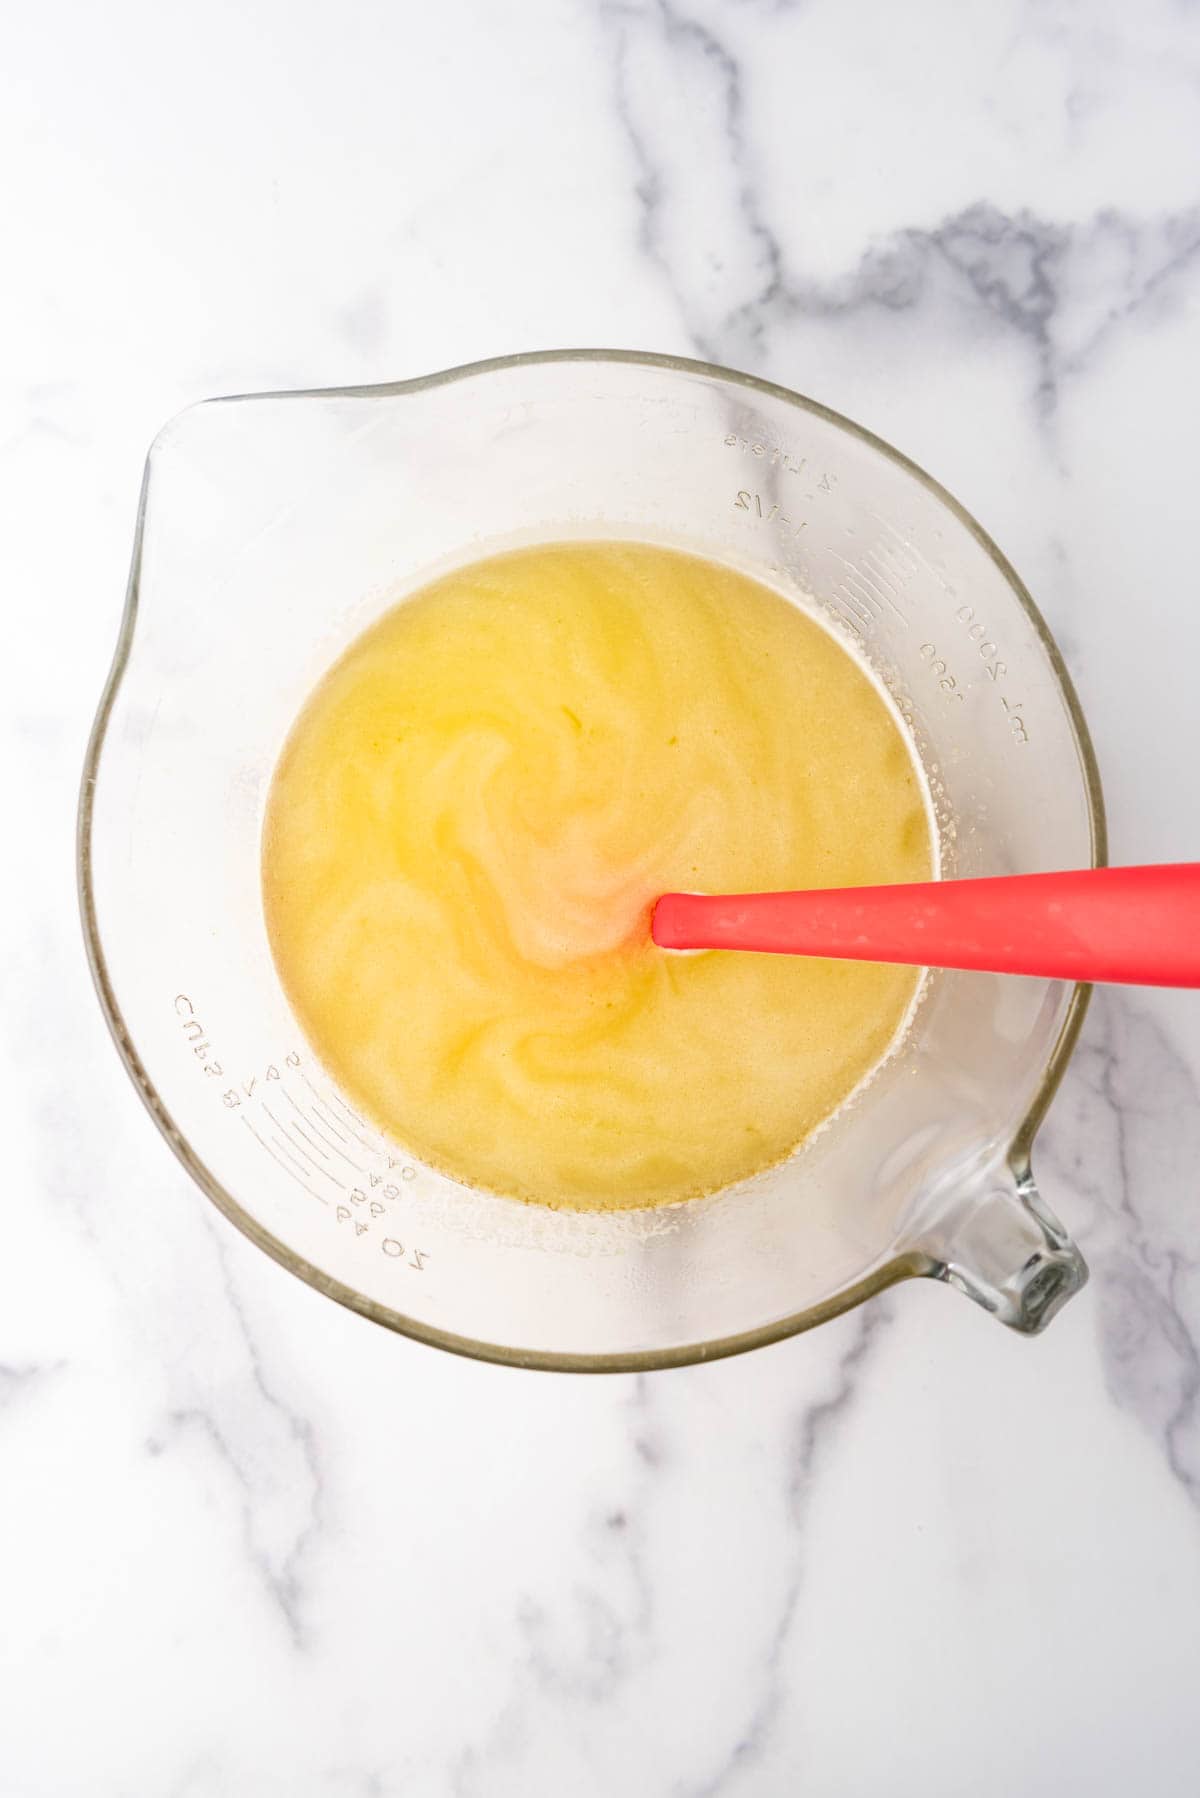 Dissolving lemon jello into hot water.